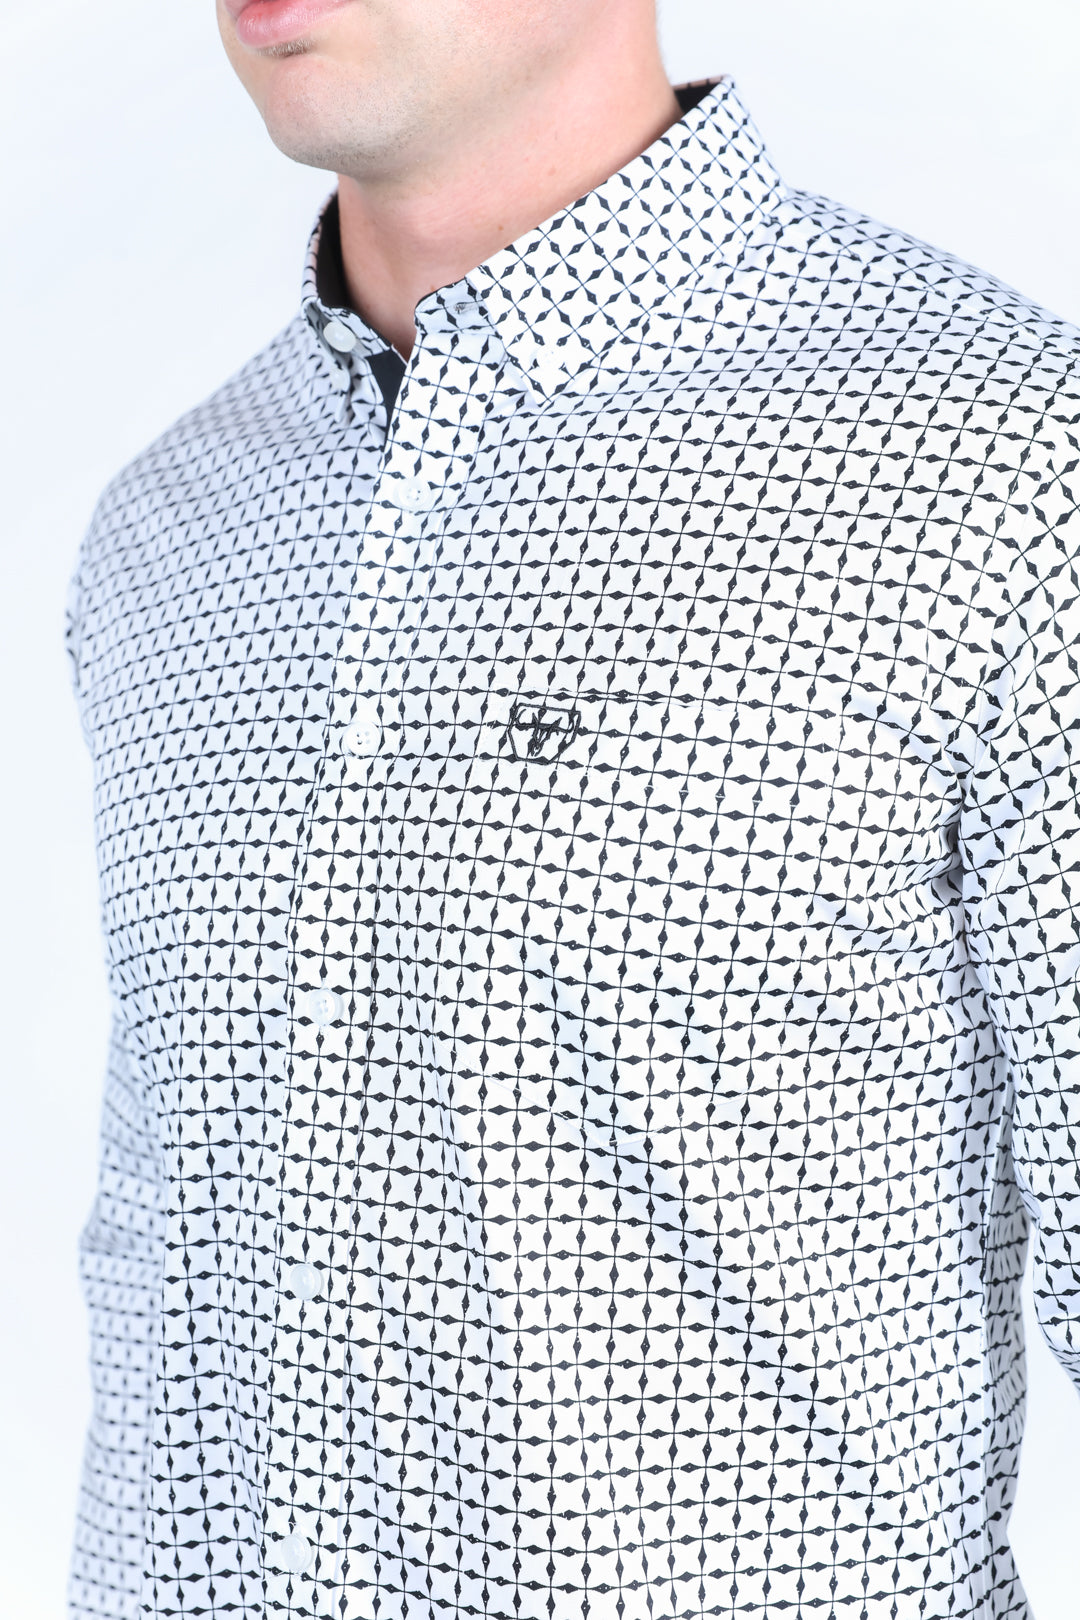 Mens Satin Cotton/Spandex Modern Fit Long Sleeve Shirt - White